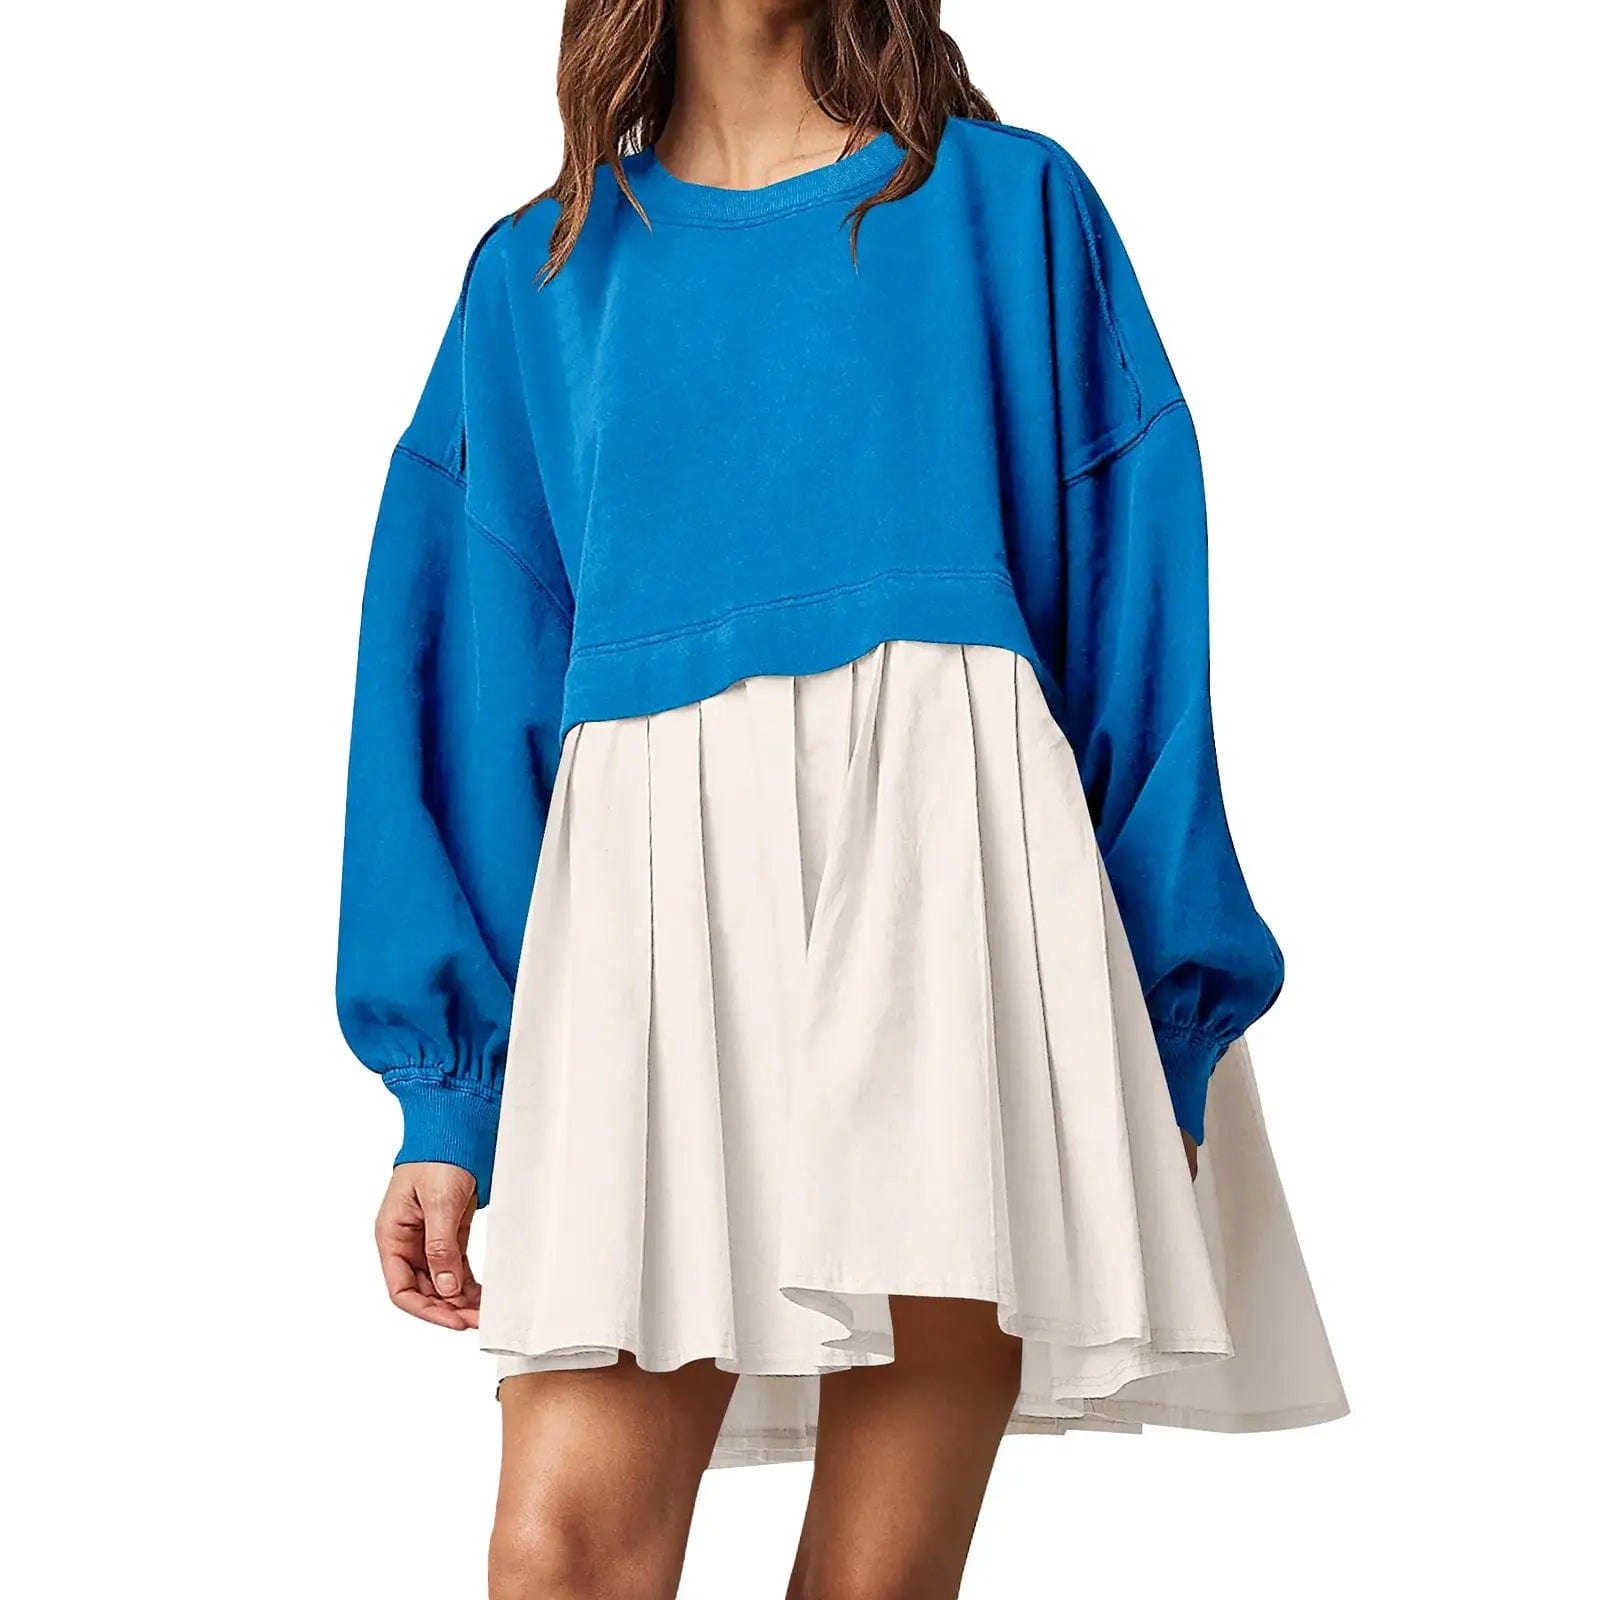 Cheky White Blue / S Womens Sweatshirt Dress Loose Long Sleeve Crewneck Pullover Tops Relaxed Fit Sweatshirts Short Dress